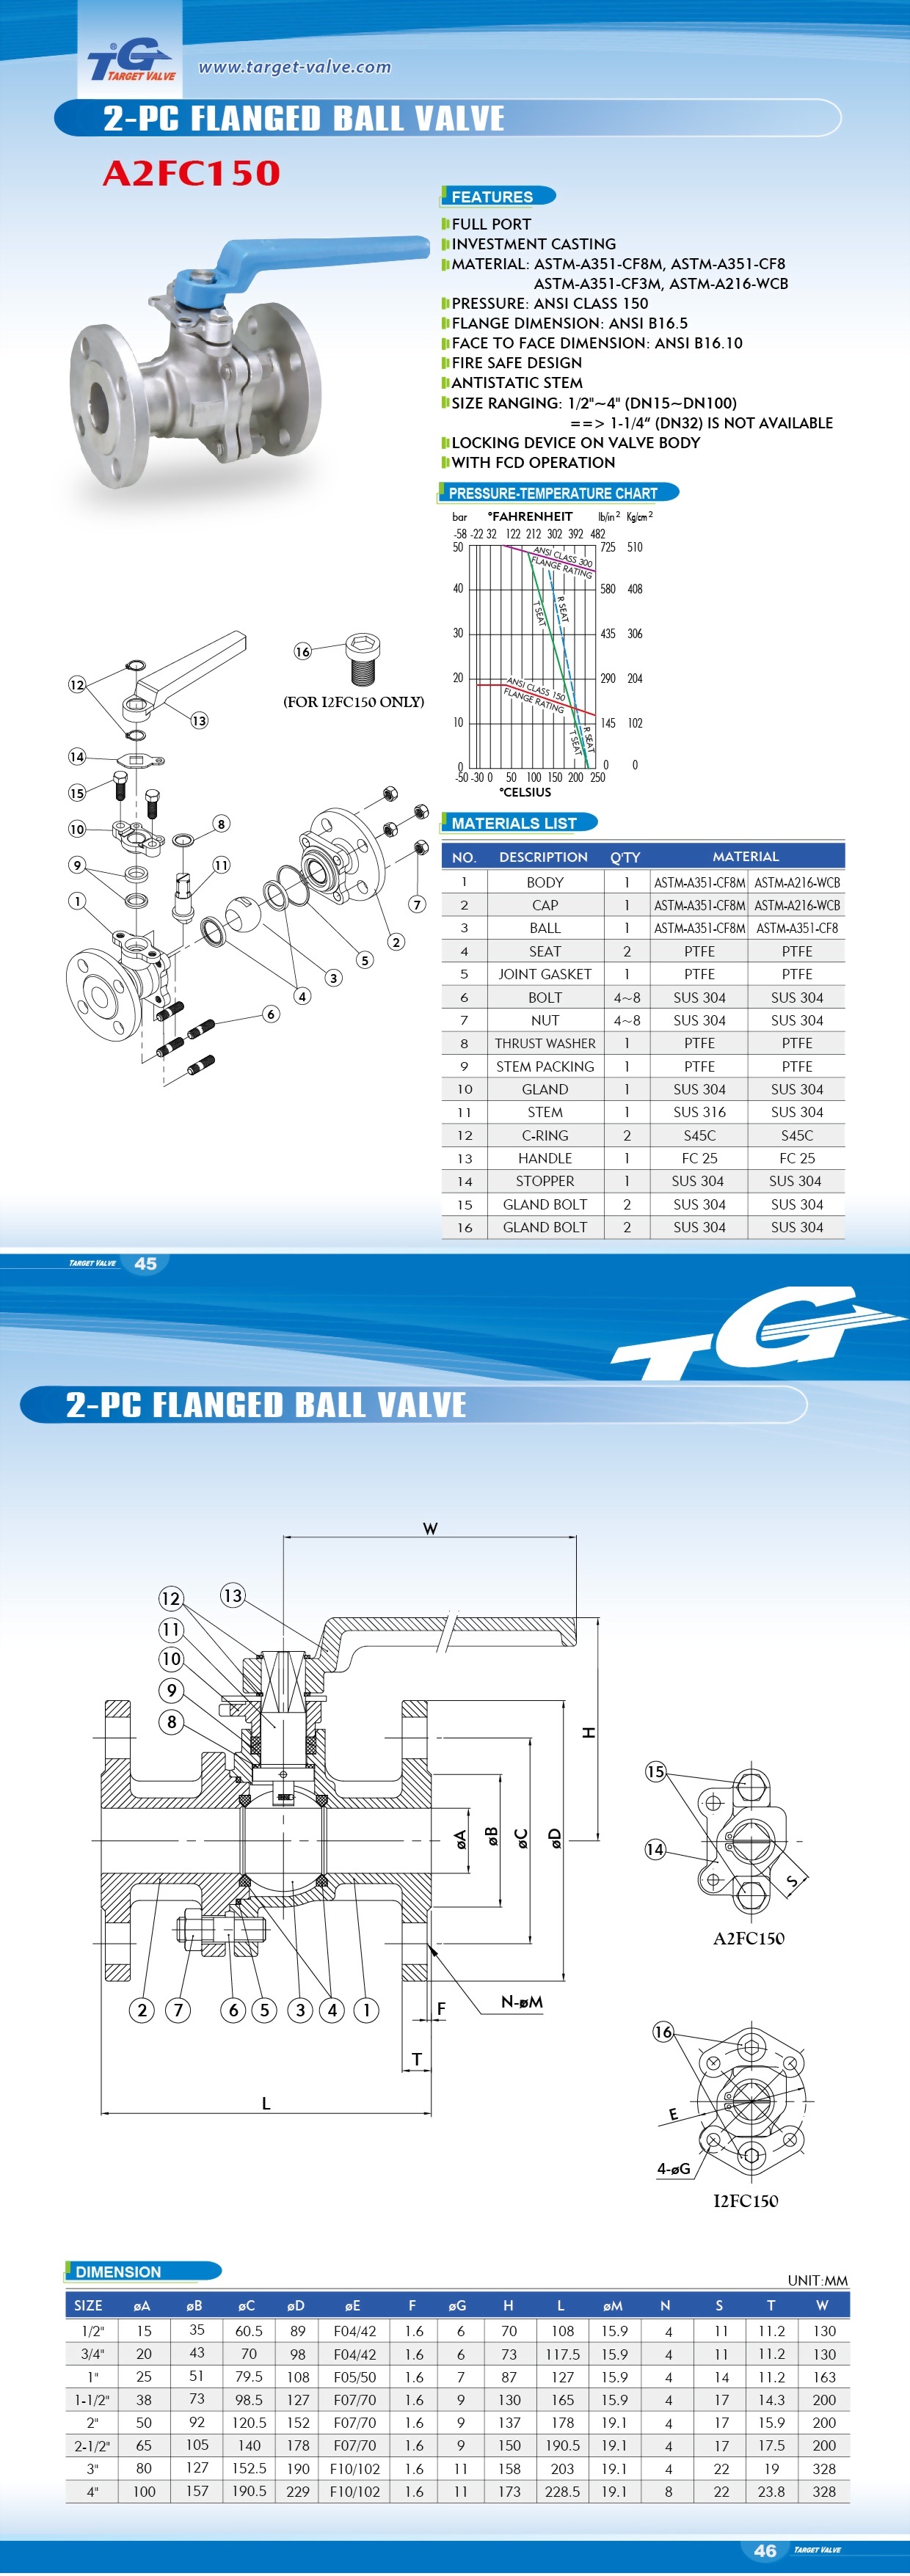 2 PC FLANGED BALL VALVE - A2FC150